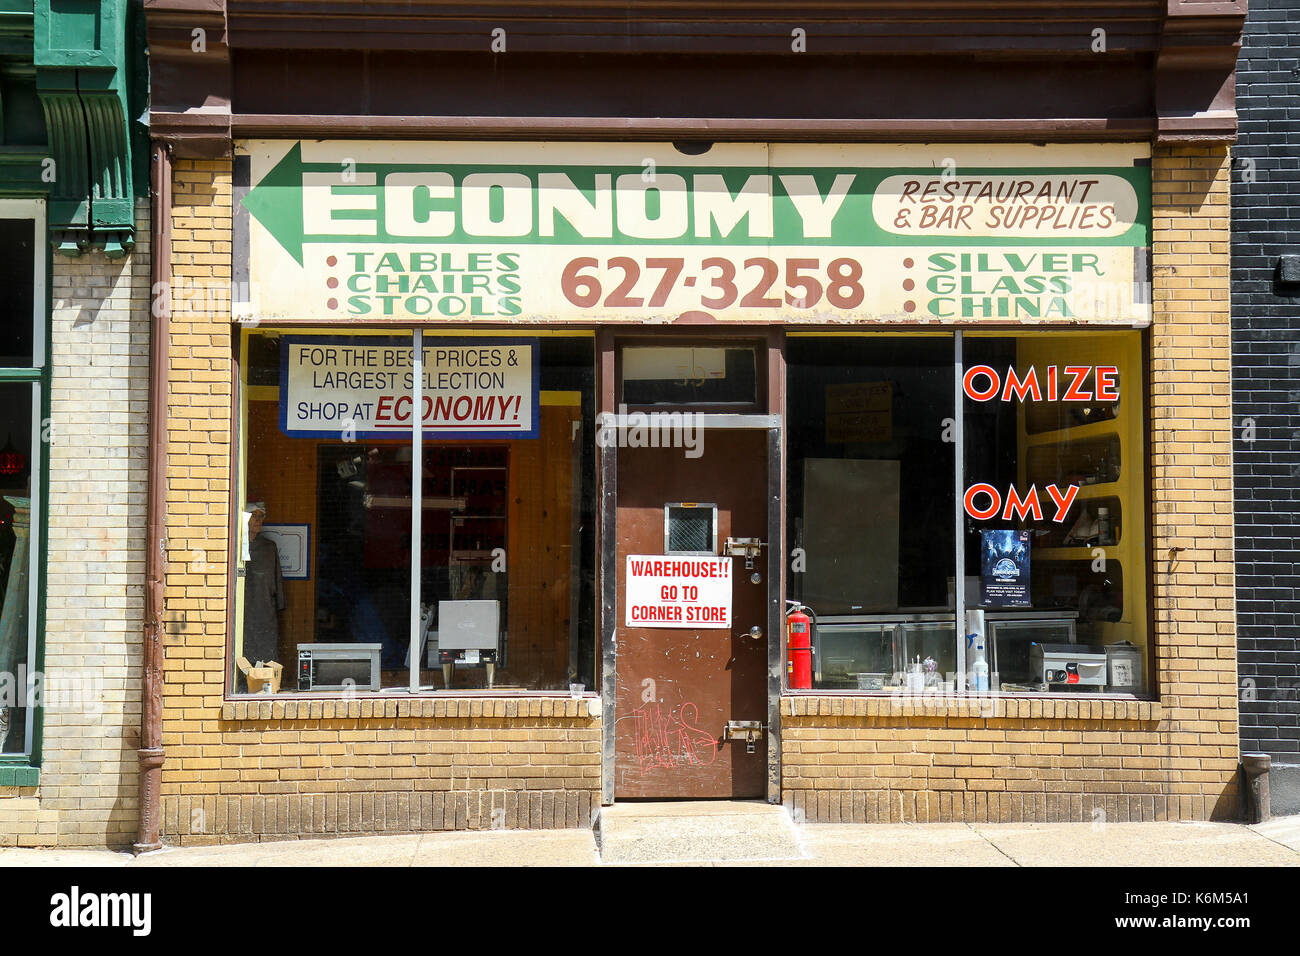 Economy Restaurant and Bar Supply Warehouse, Old City, Philadelphia, Pennsylvania, United  States Stock Photo